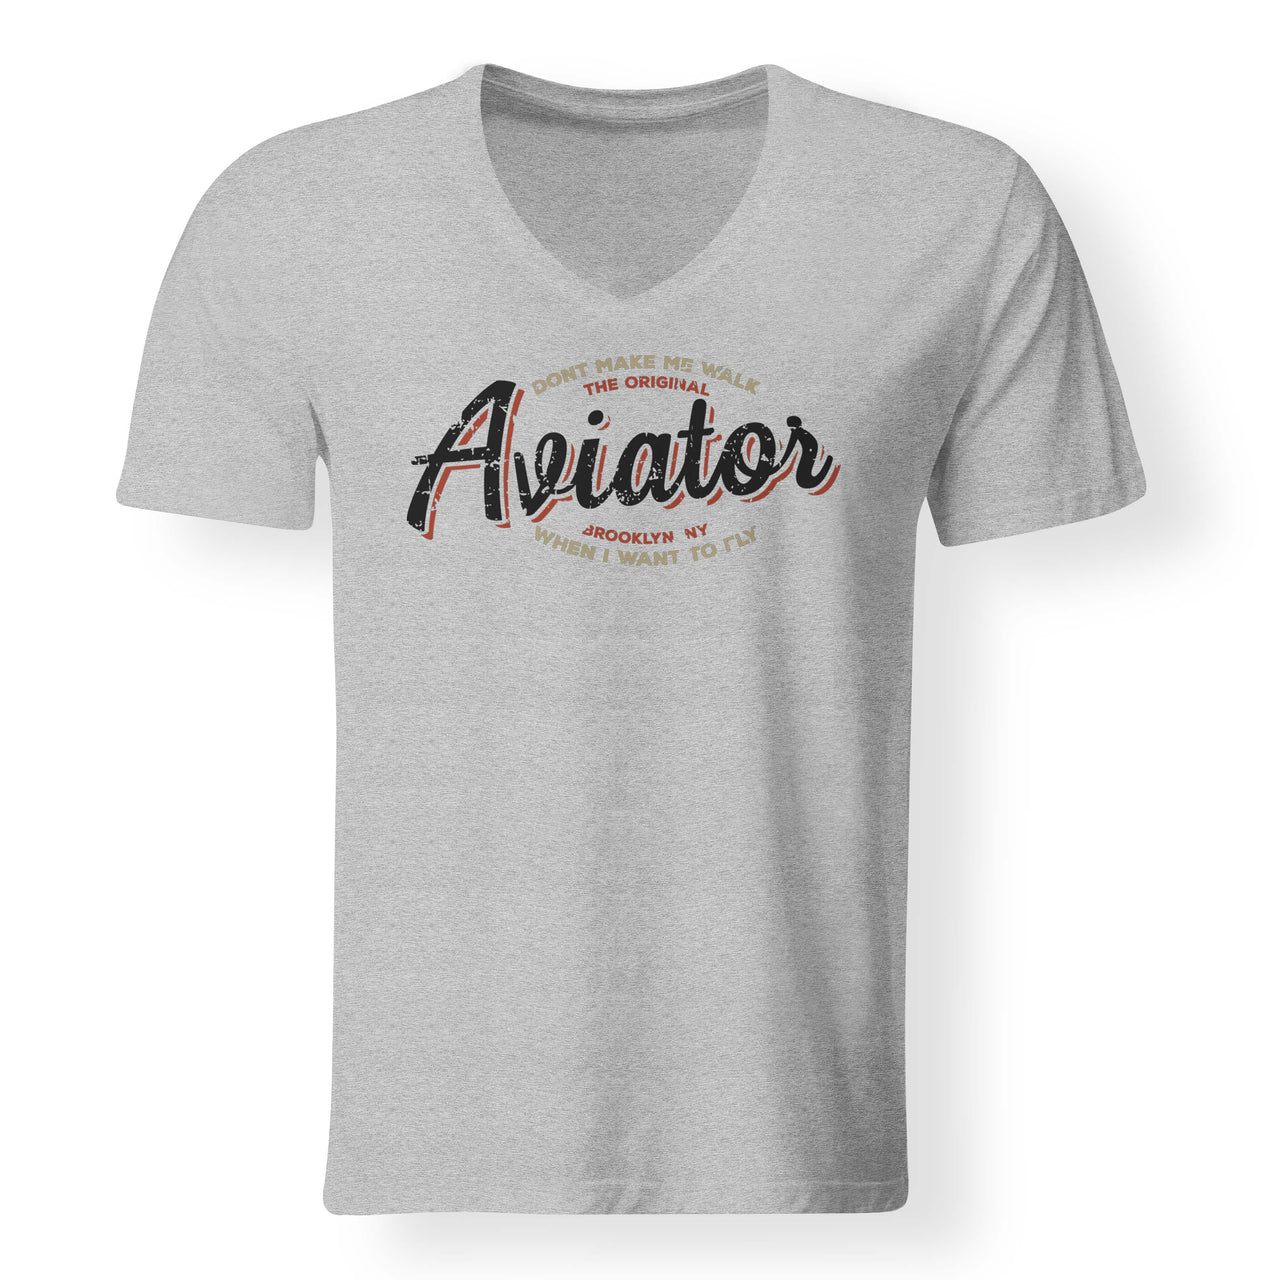 Aviator - Dont Make Me Walk Designed V-Neck T-Shirts